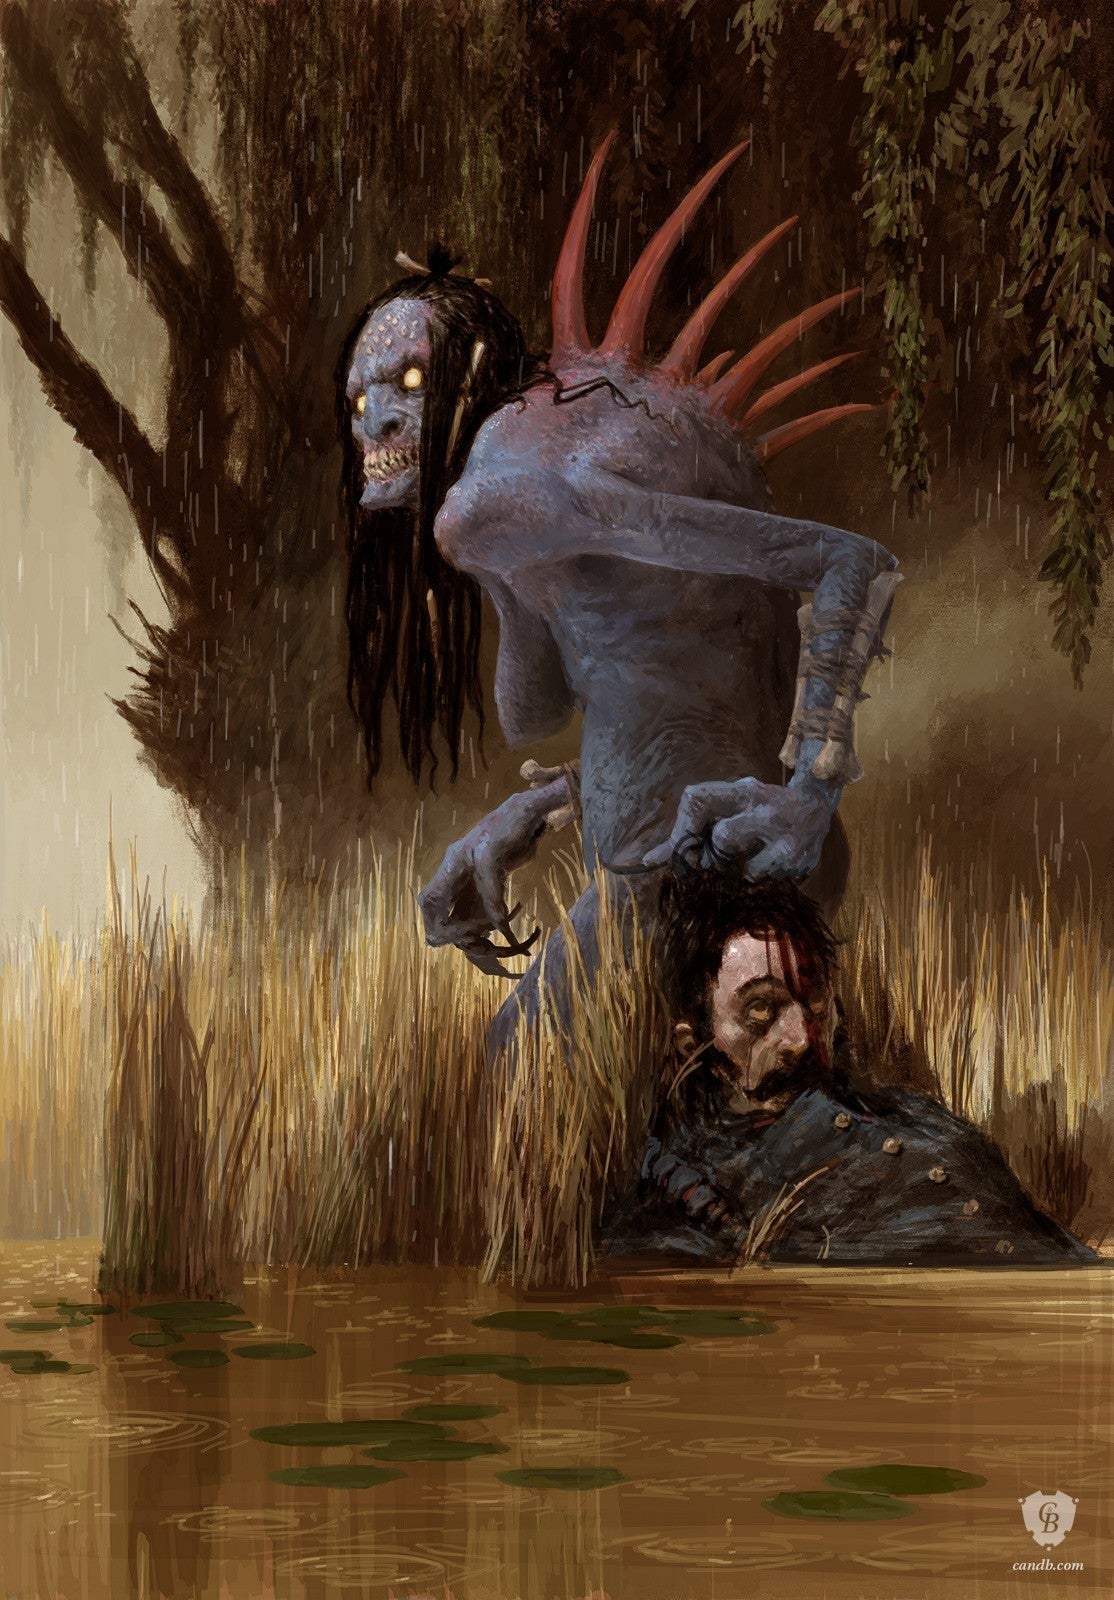 Fine Art: A Fresh Batch Of Beautiful Art From The Witcher 3 | Kotaku Australia